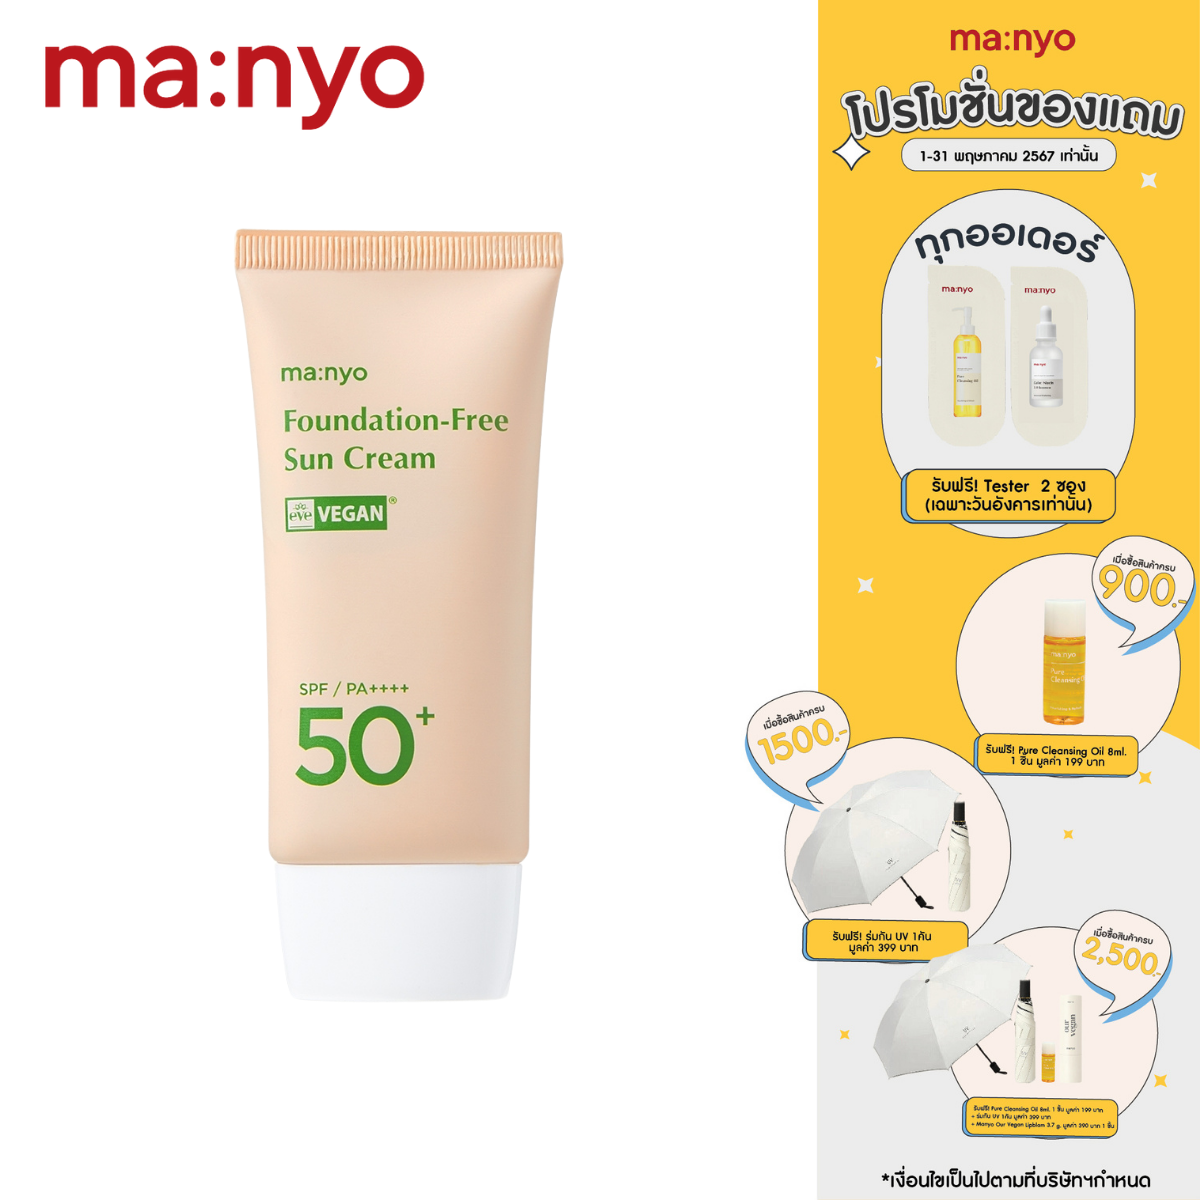 Manyo Foundation-Free Sun Cream 50 ml.  มานโย ฟาวน์เดชั่น-ฟรี ซัน ครีม 50 มล.